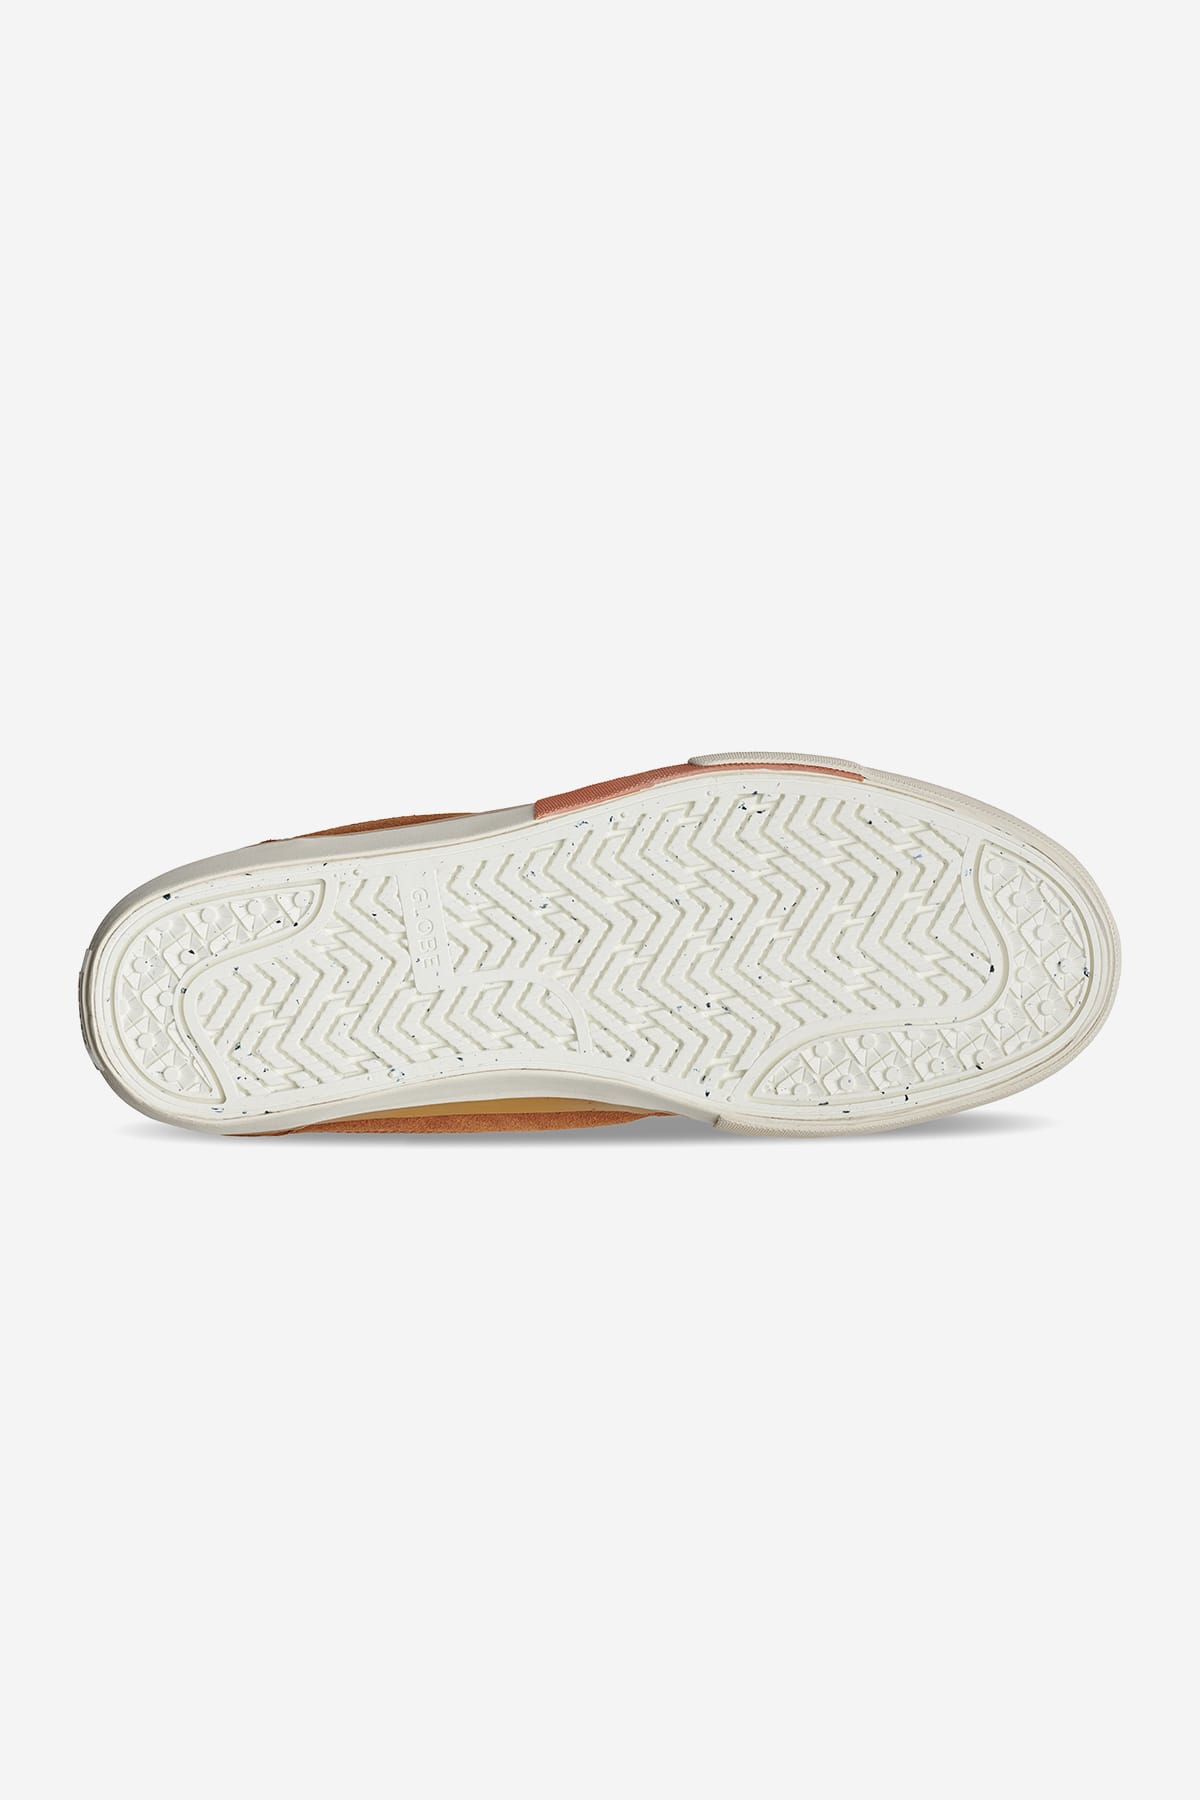 Globe - Mahalo Plus - Pecan/Antique - skateboard Shoes